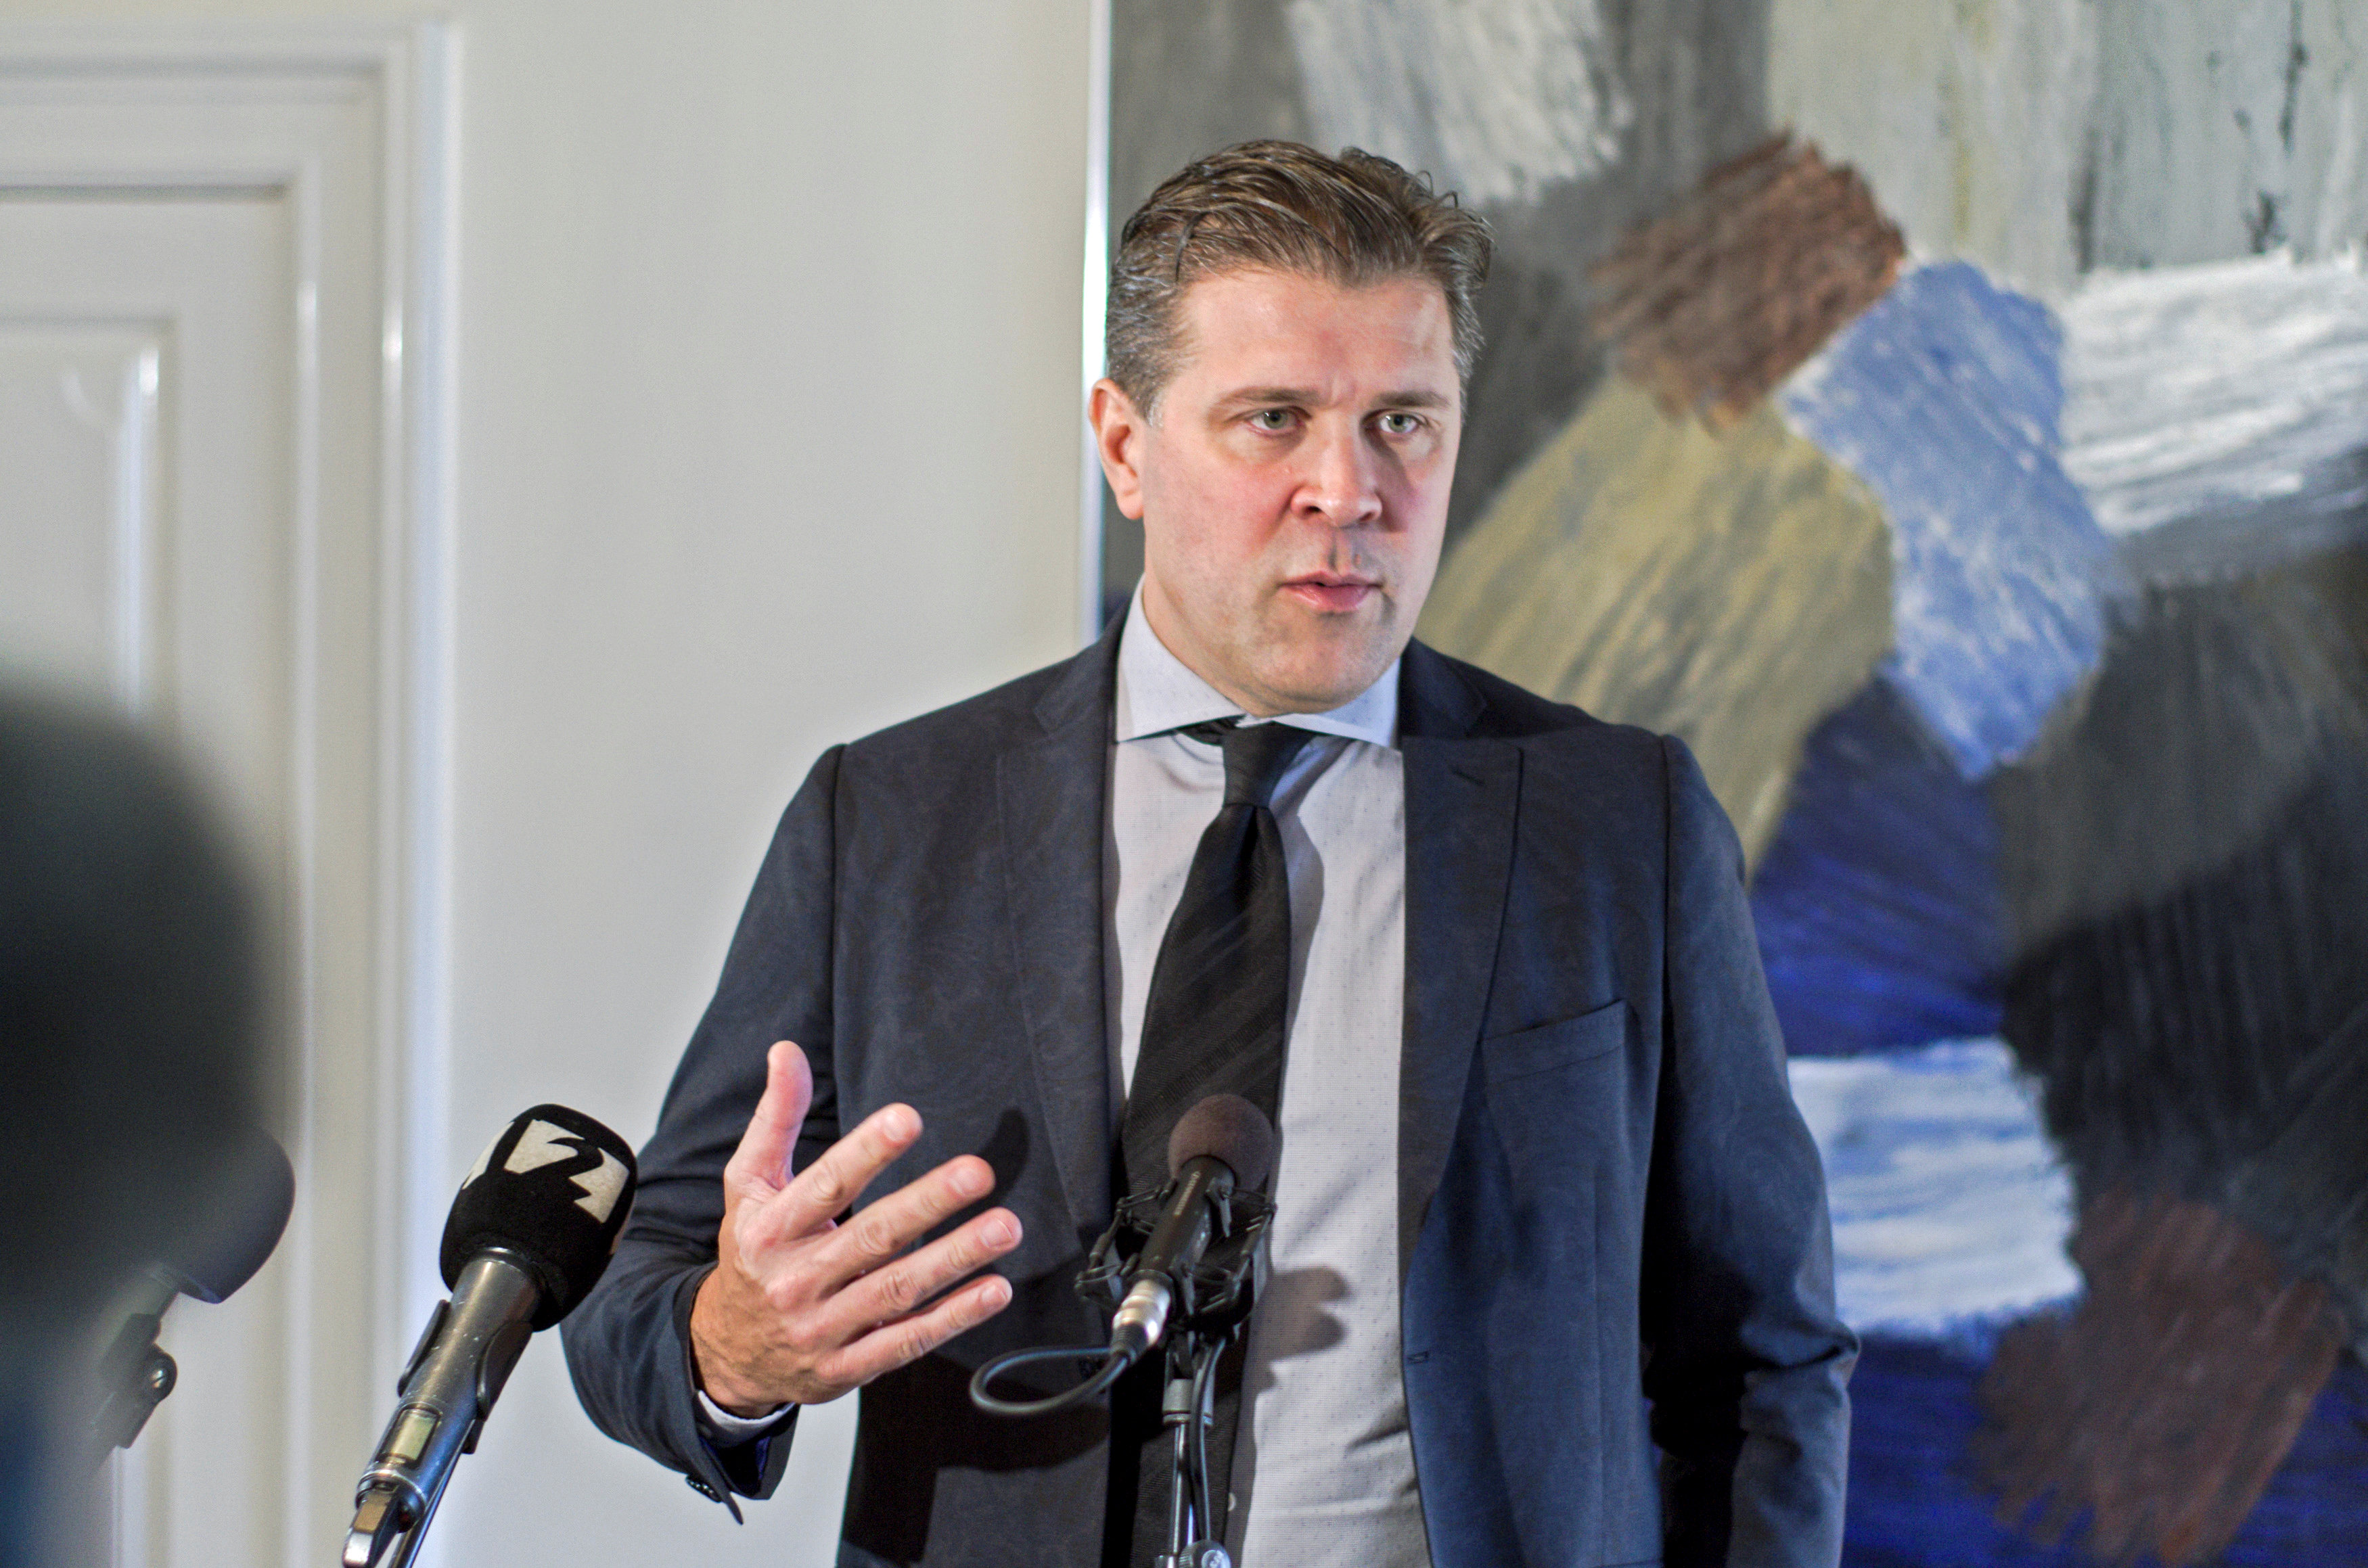 Bjarni Benediktsson of the Independence Party gives a news conference in Reykjavik, Iceland November 2, 2016. REUTERS/Geirix